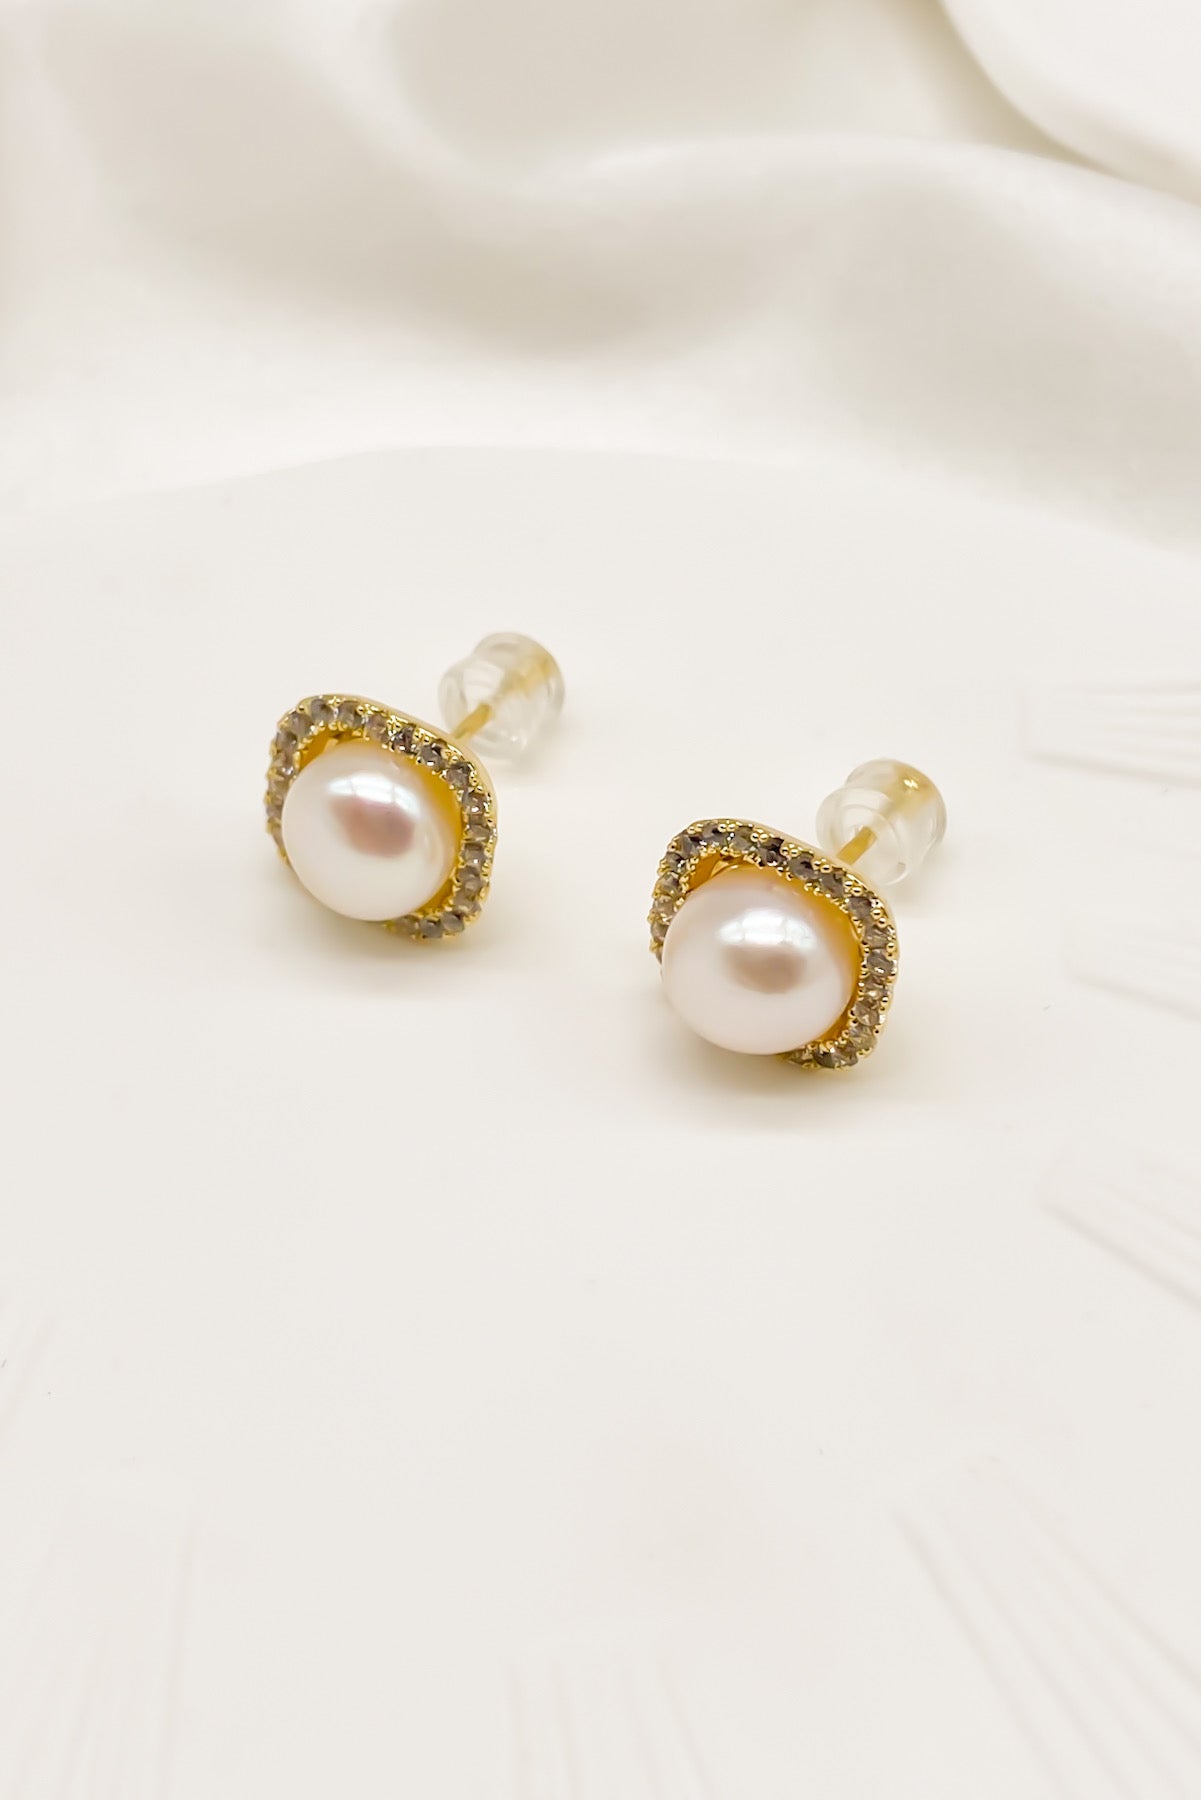 SKYE Shop Chic Modern Elegant Classy Women Jewelry French Parisian Minimalist Alexandra Freshwater Pearl Stud Earrings 8